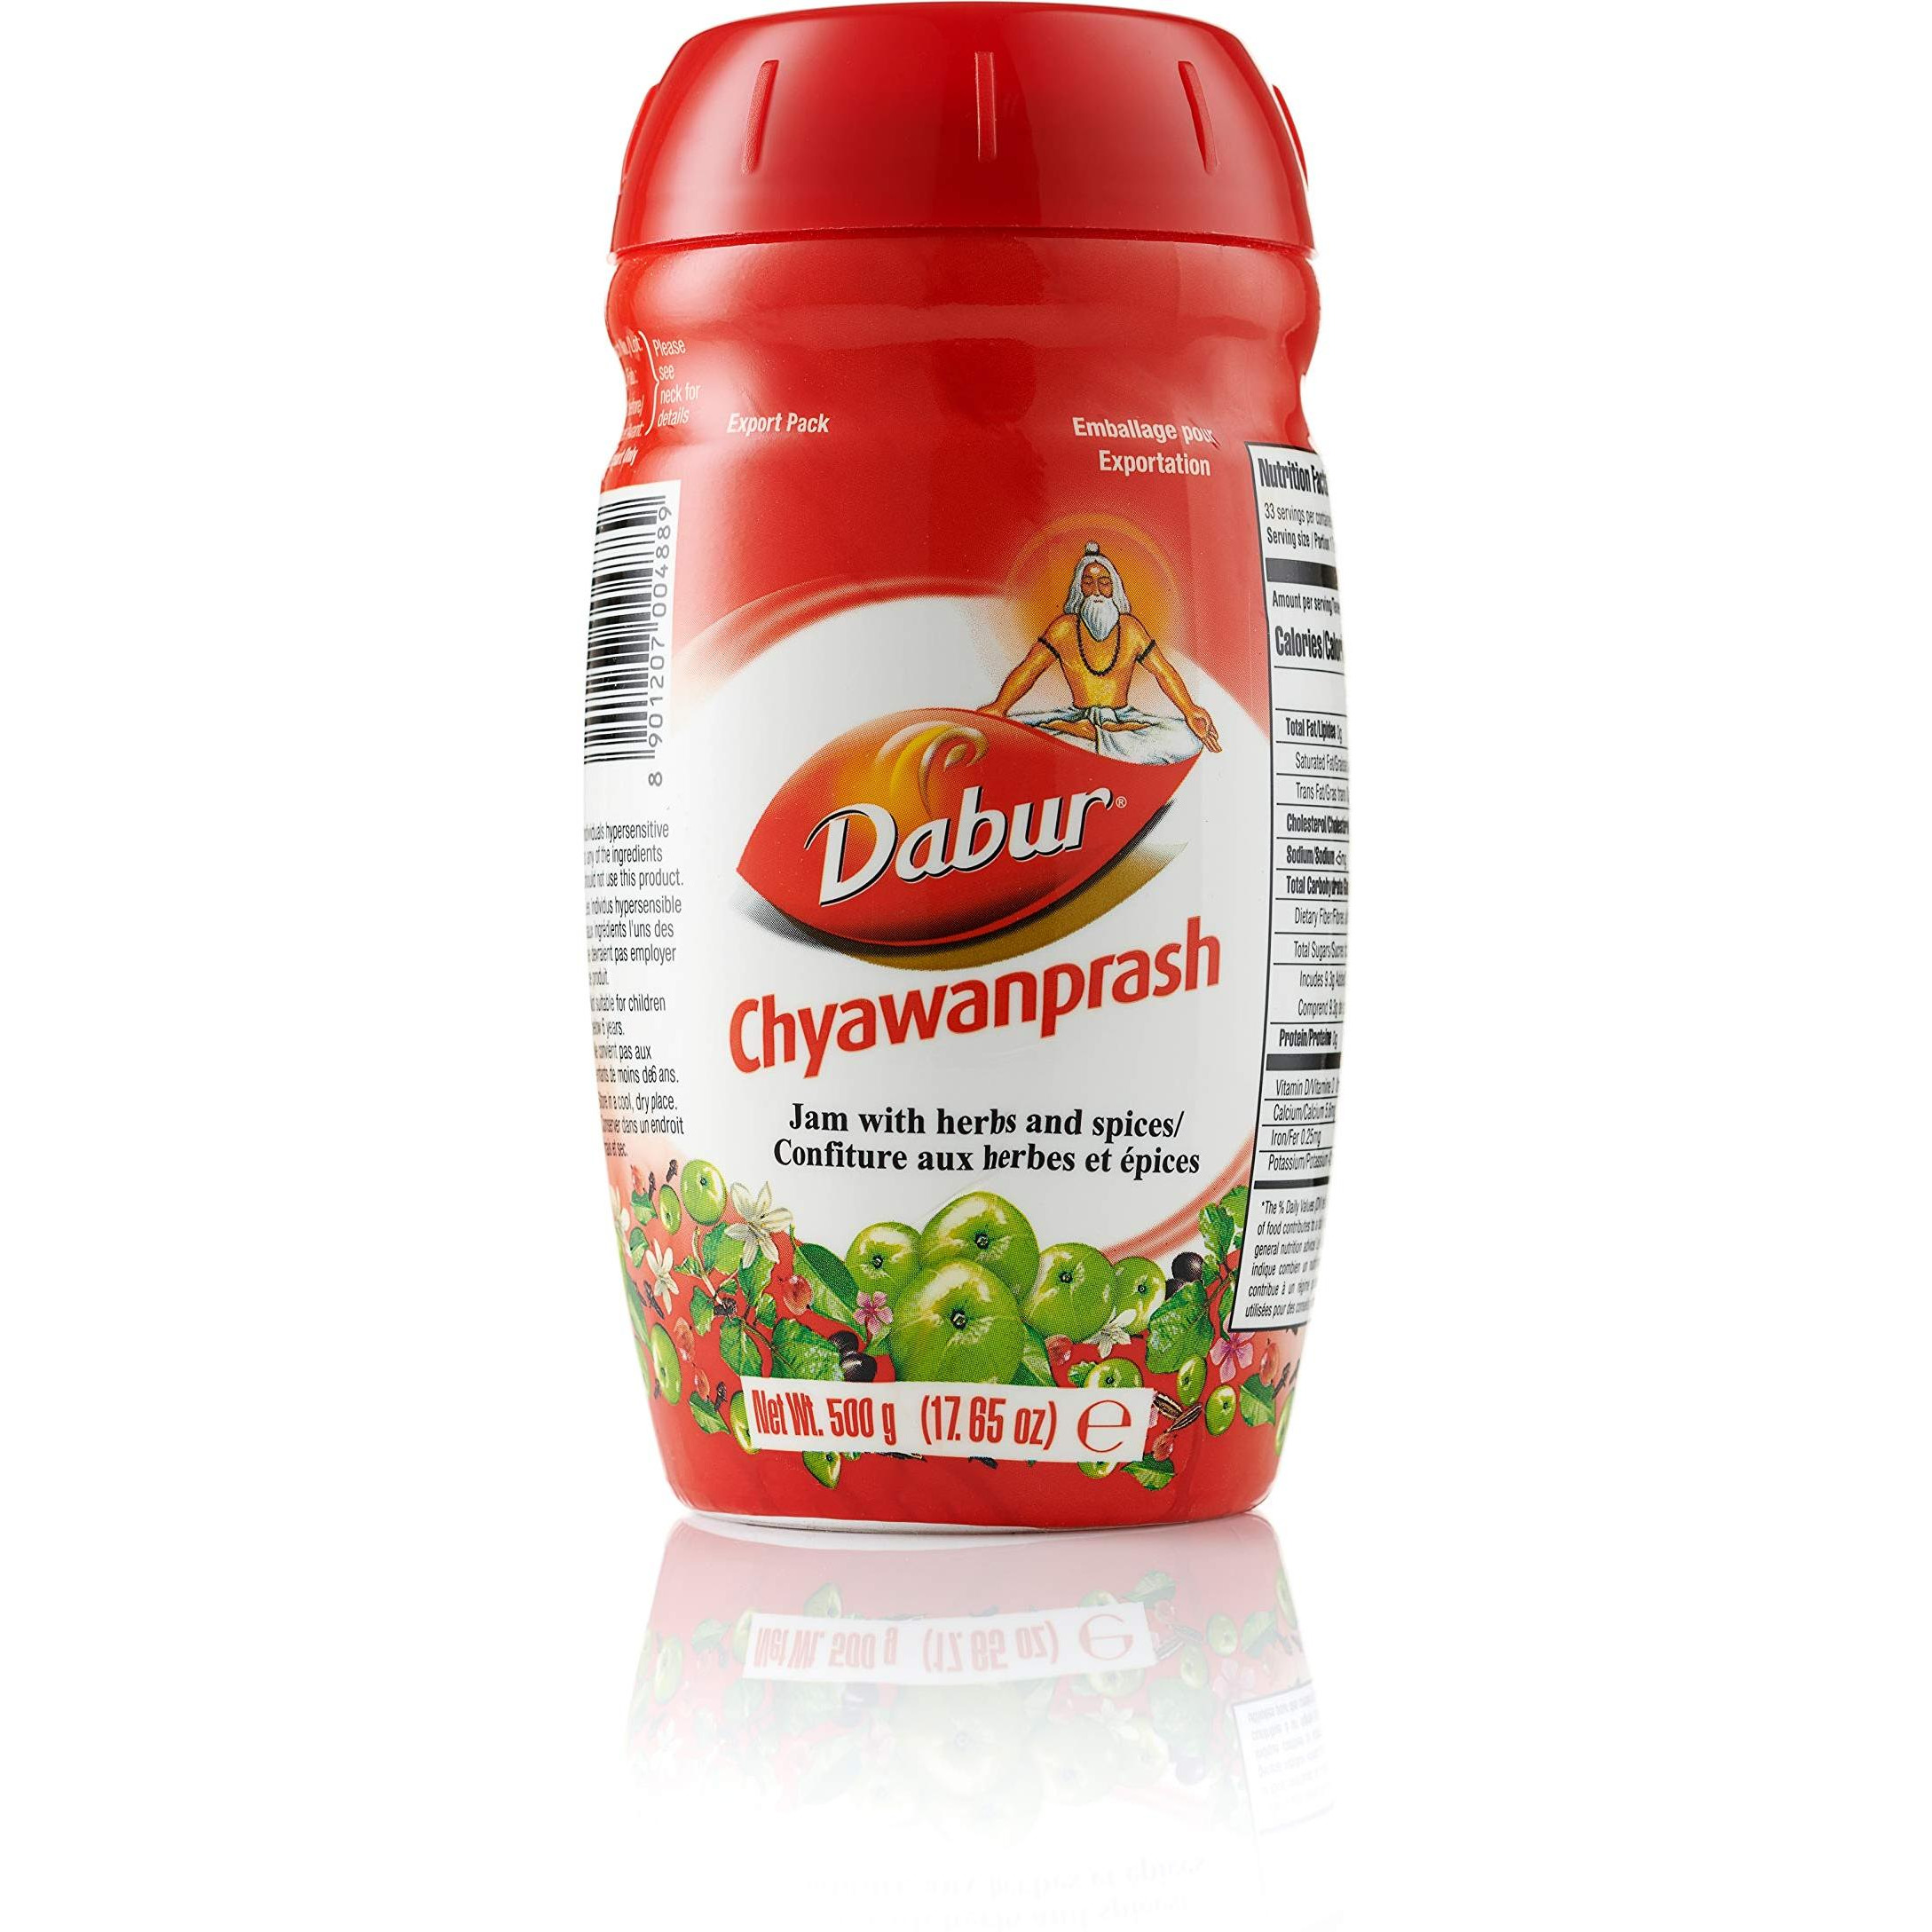 Dabur Chyawanprash 500gms. - Spread with Herbs & Spices